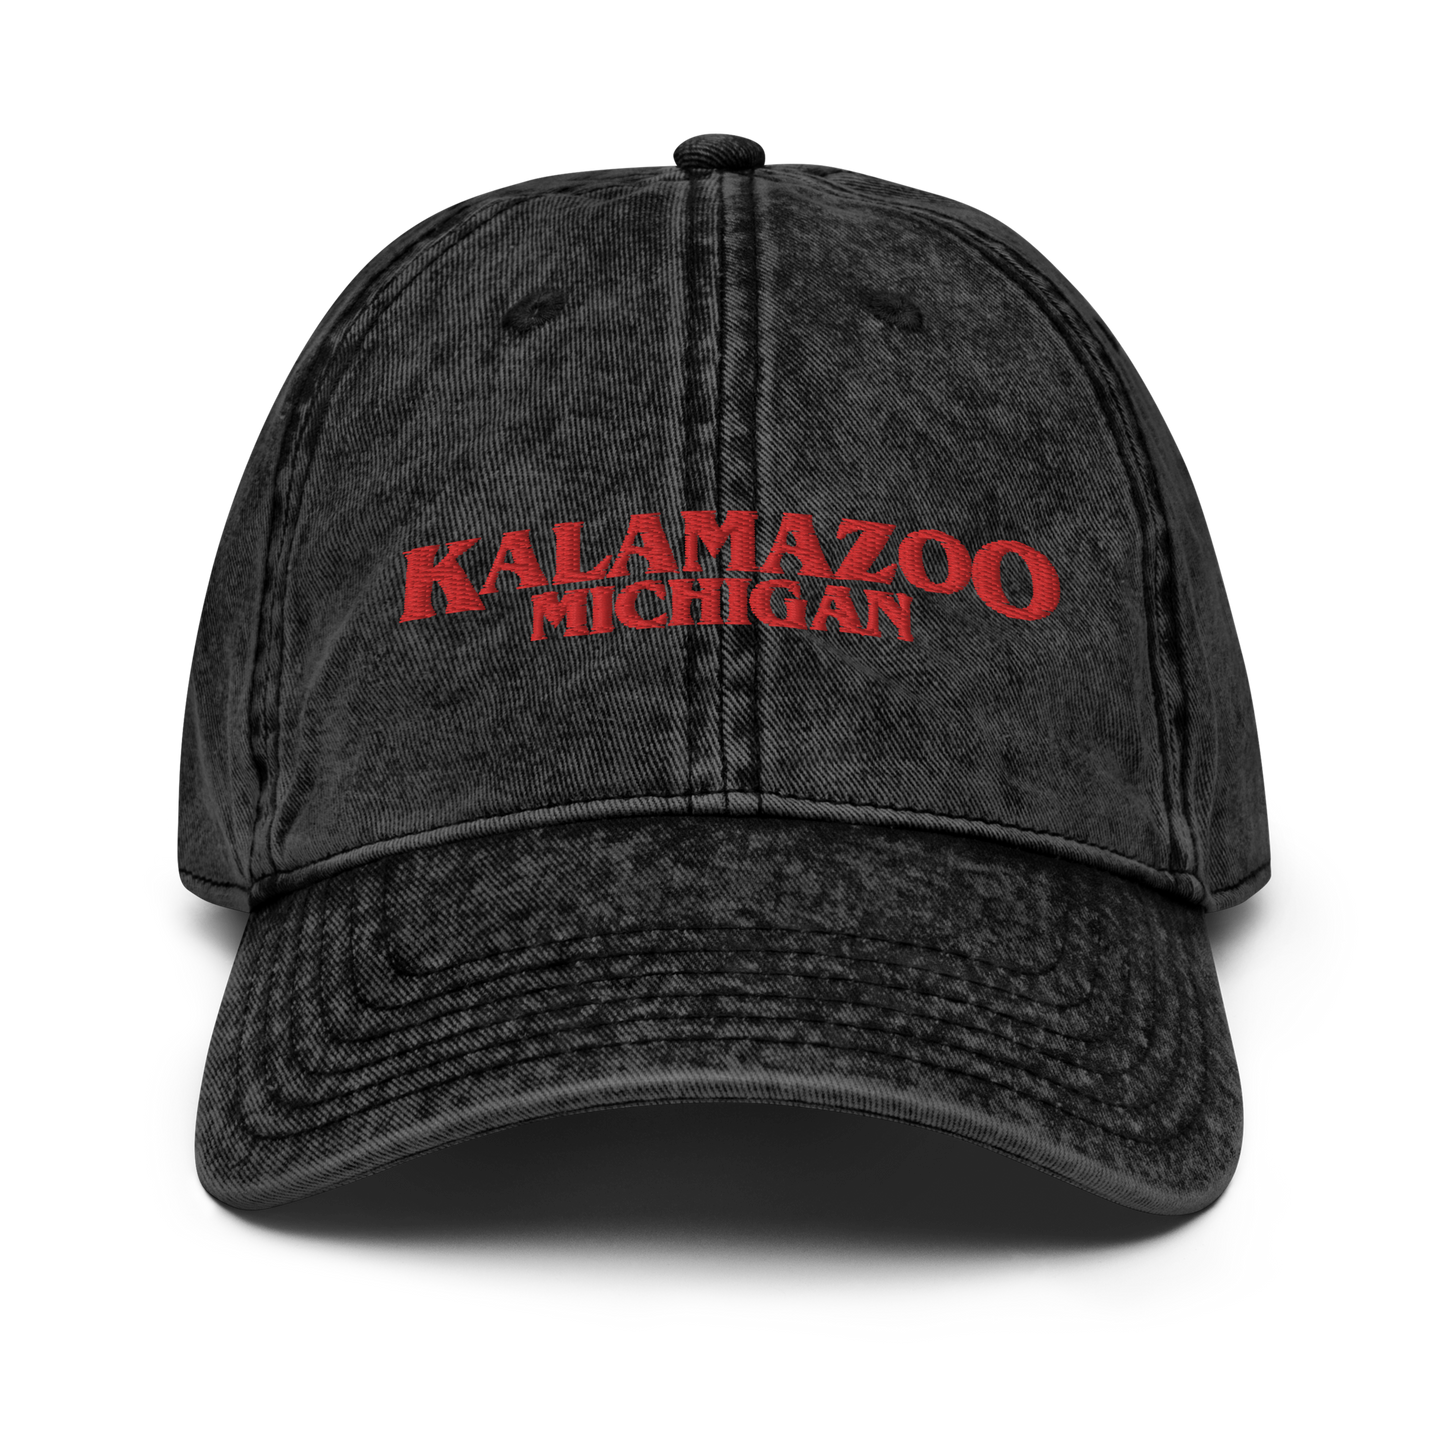 'Kalamazoo Michigan' Vintage Baseball Cap (1980s Drama Parody)